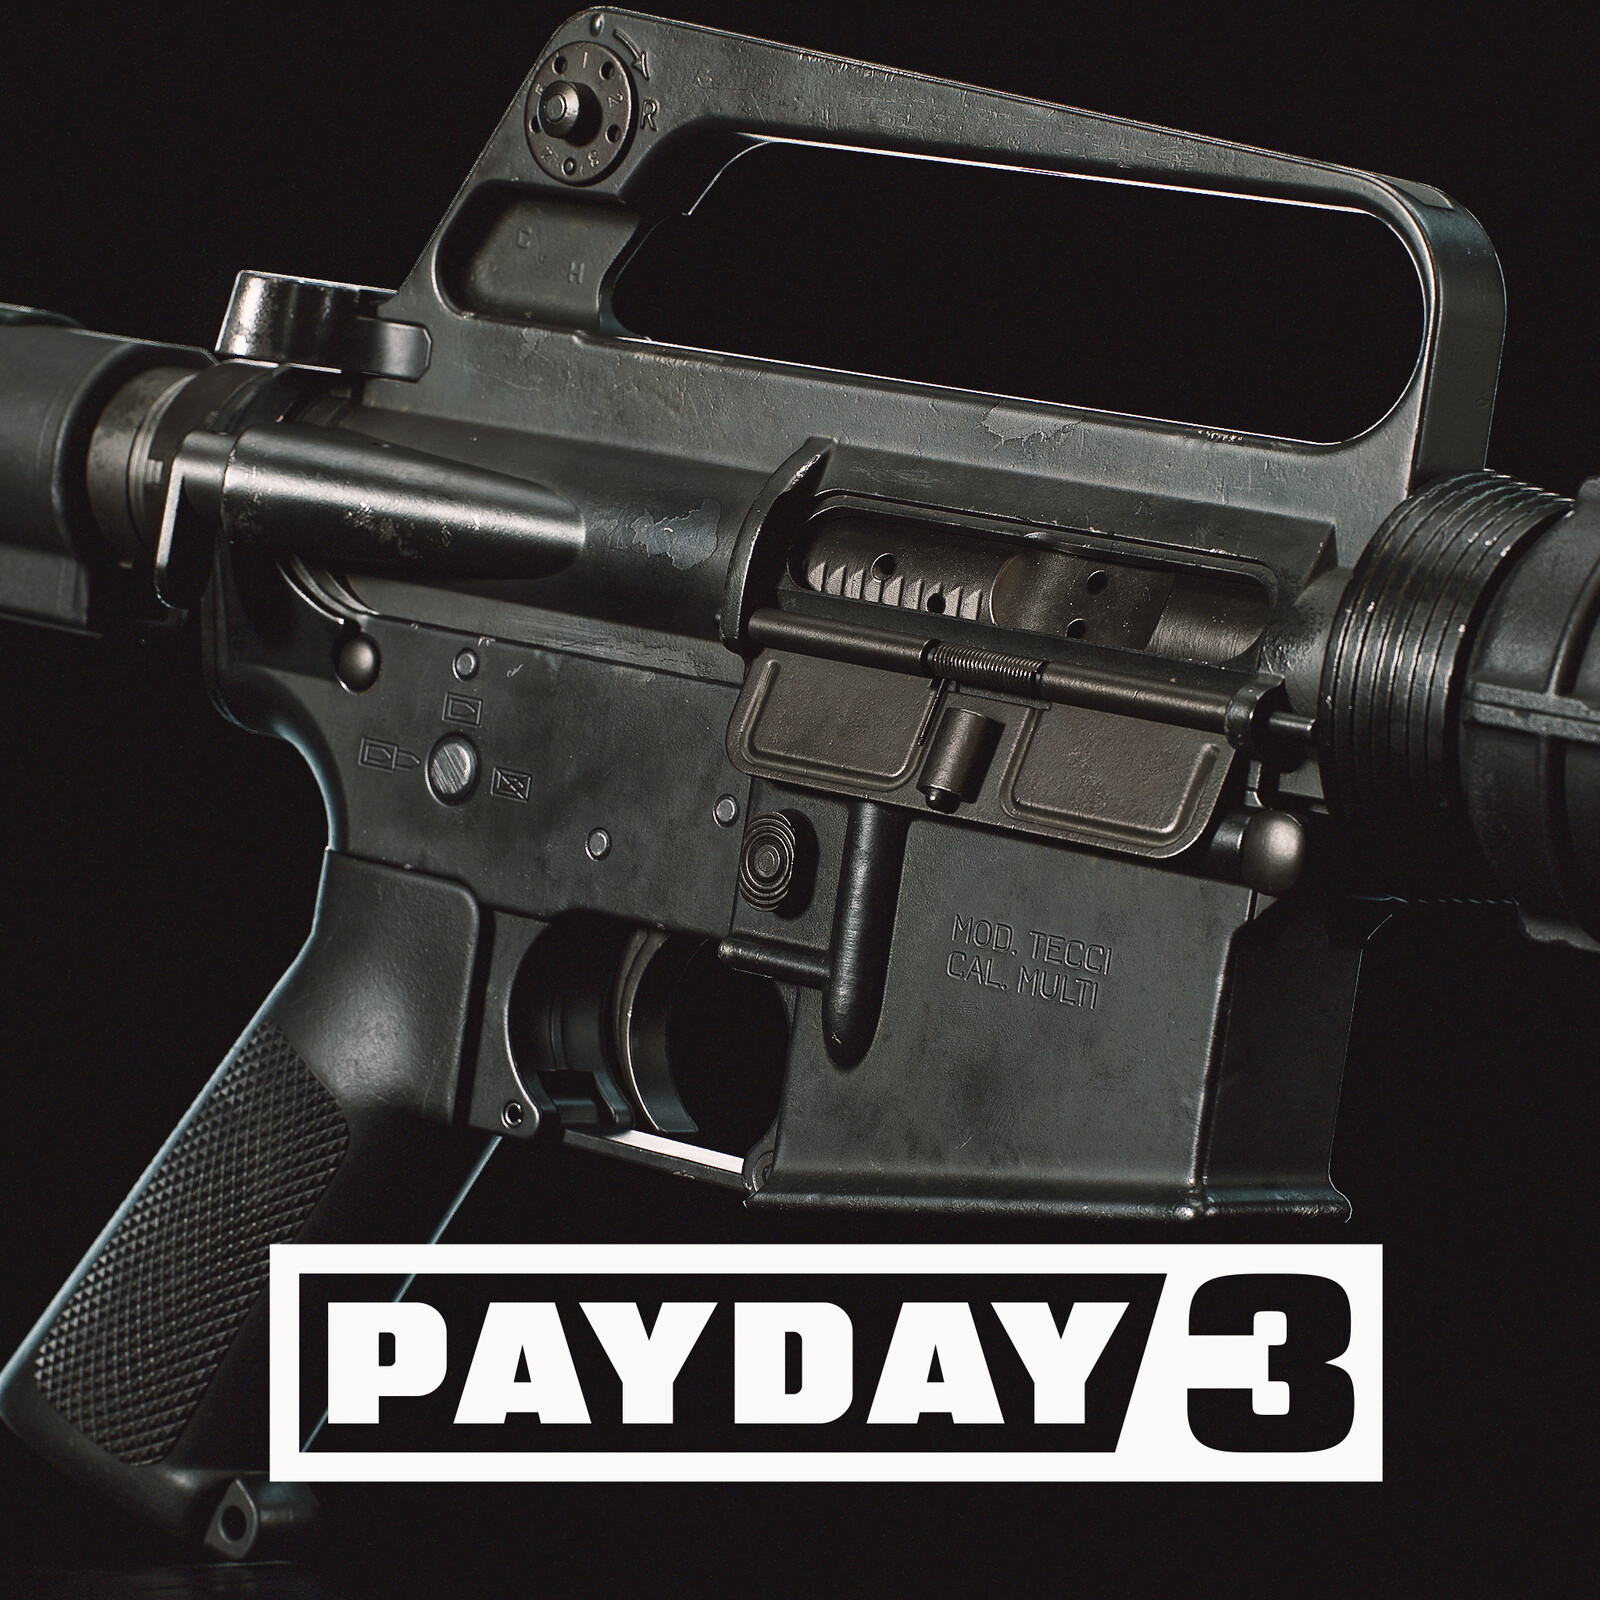 Payday 3 - "Old Faithful" Weapon Preset